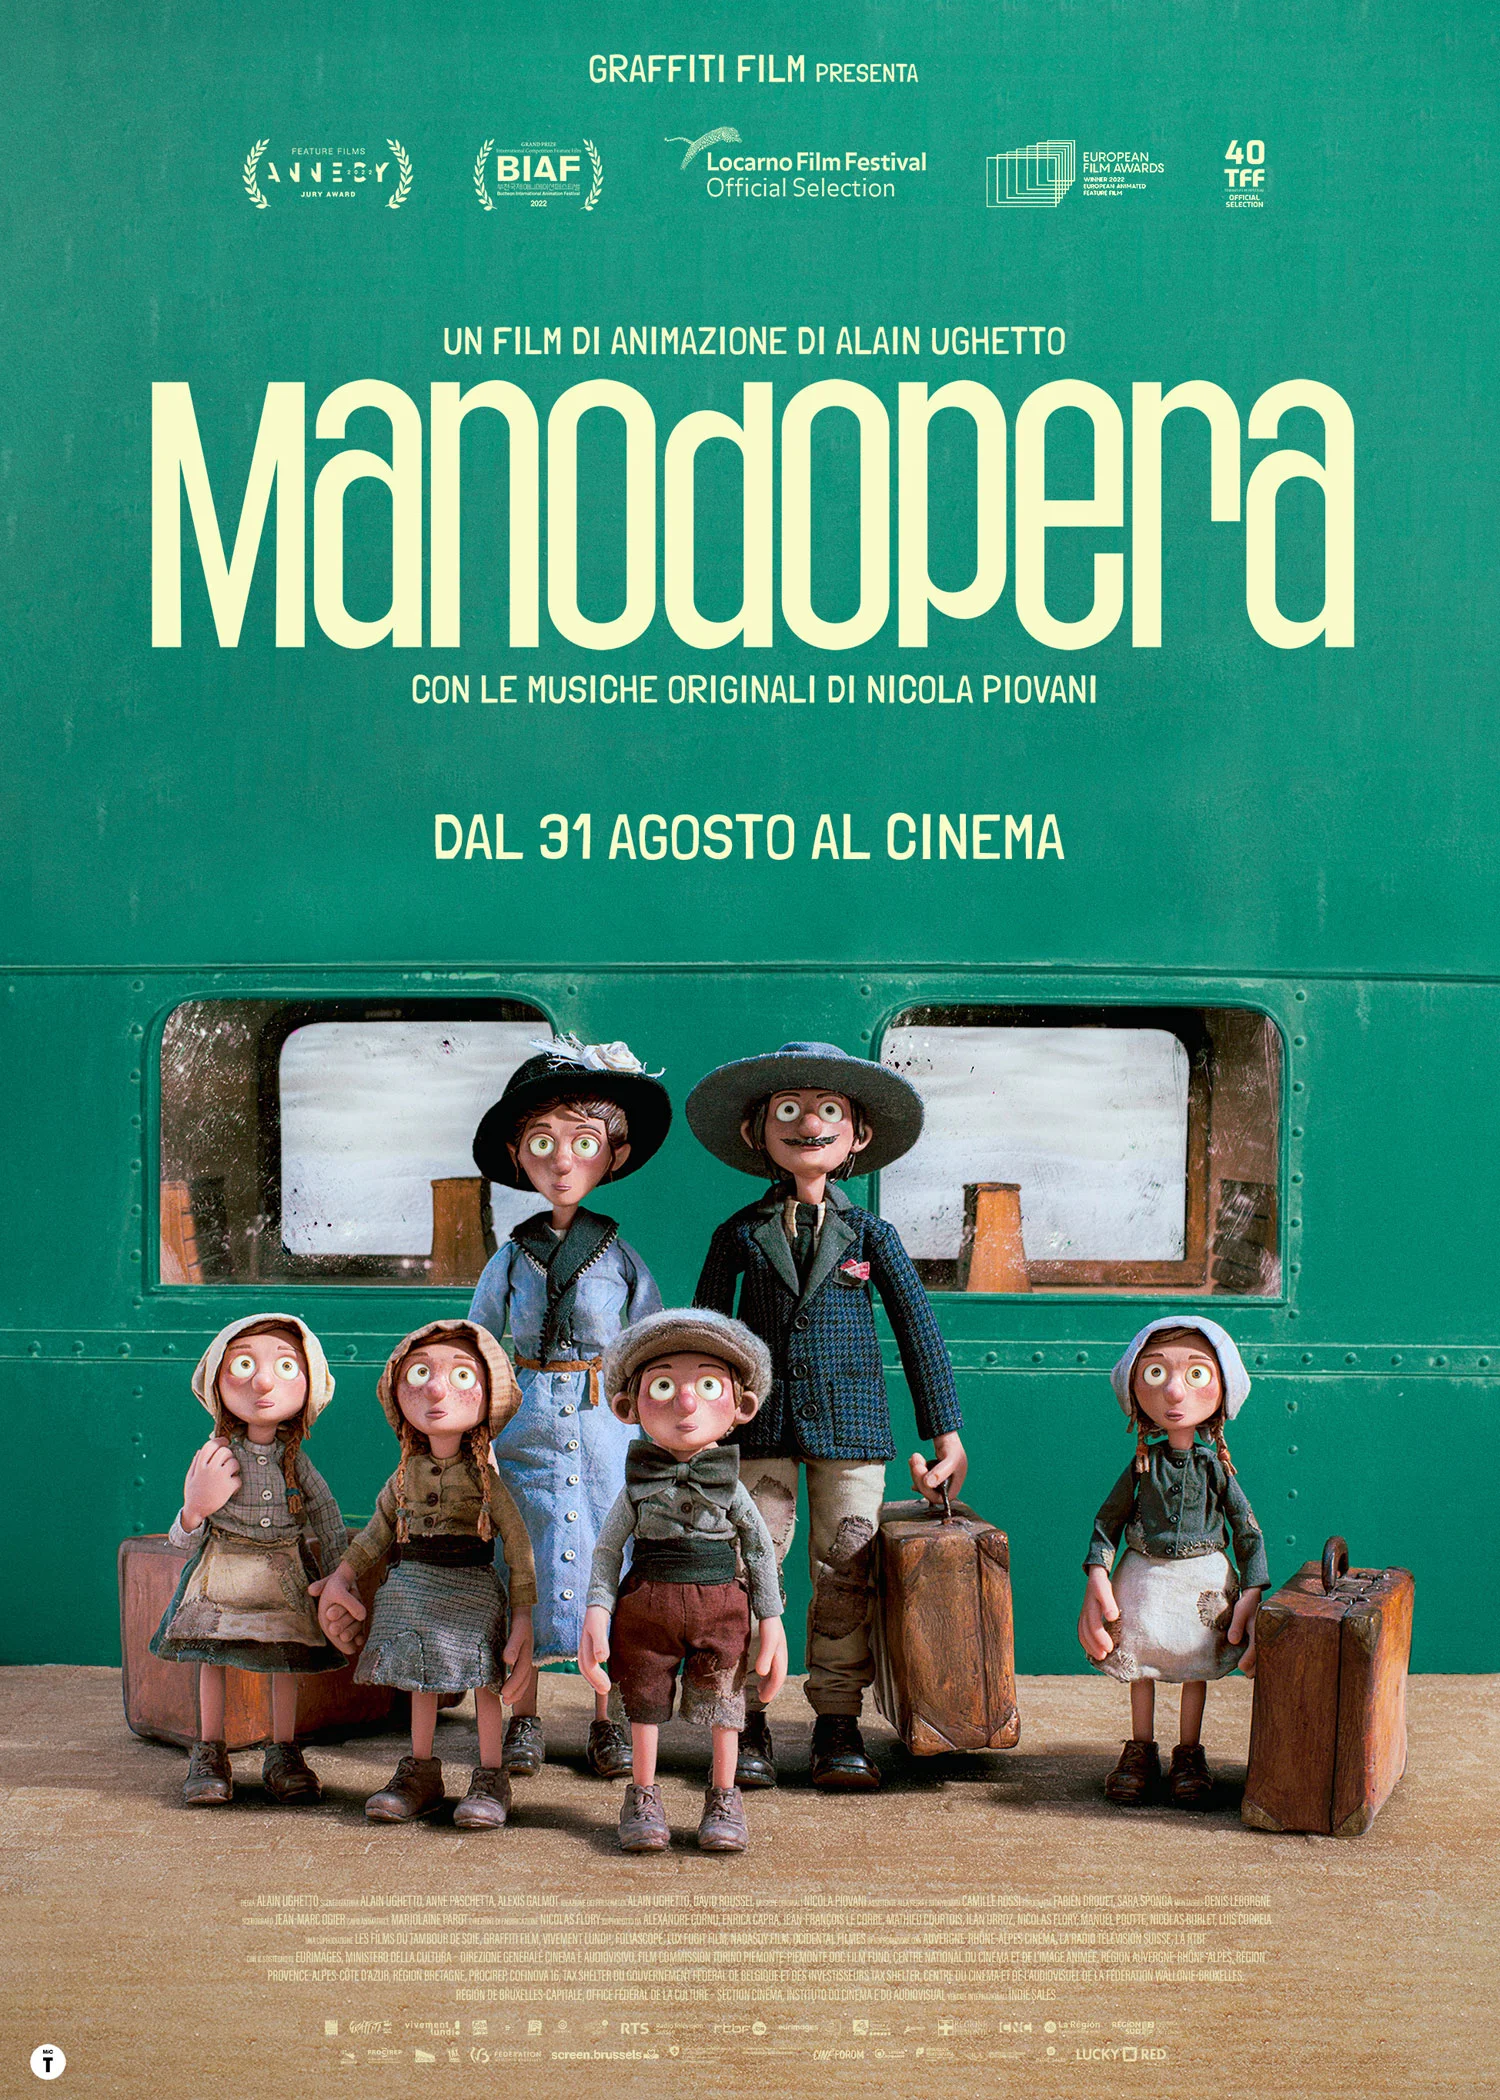 [RECENSIONE] Manodopera (Alain Ughetto)